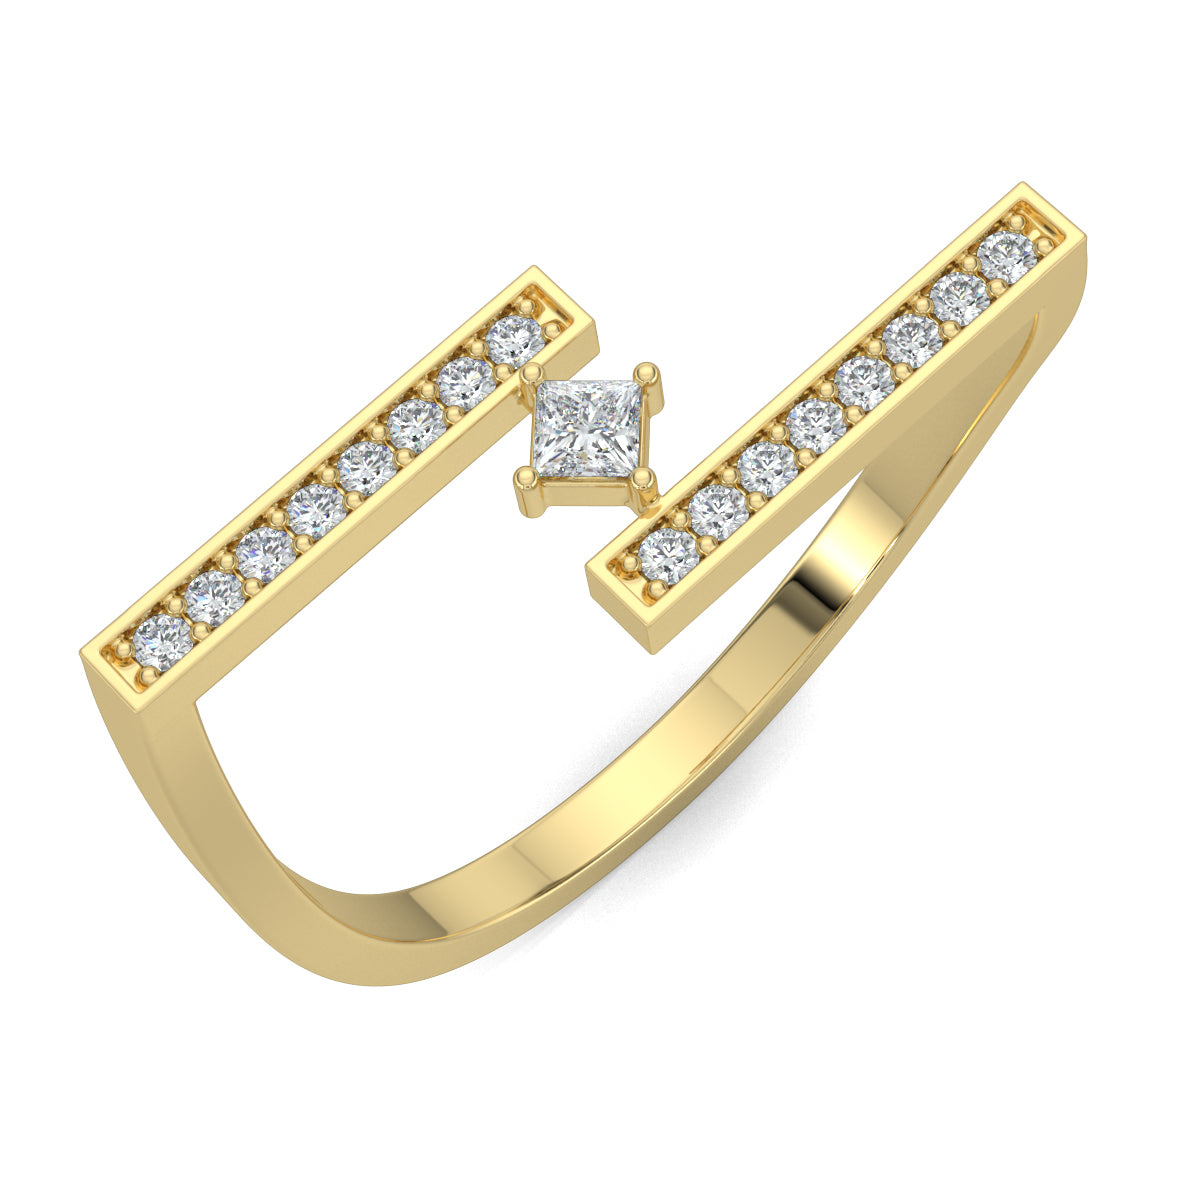 Yellow Gold, Diamond Ring,  Natural diamond ring, Lab-grown diamond ring, everyday diamond ring, open-ended band ring, round diamond accents, princess-cut diamond center, timeless elegance, modern luxury.